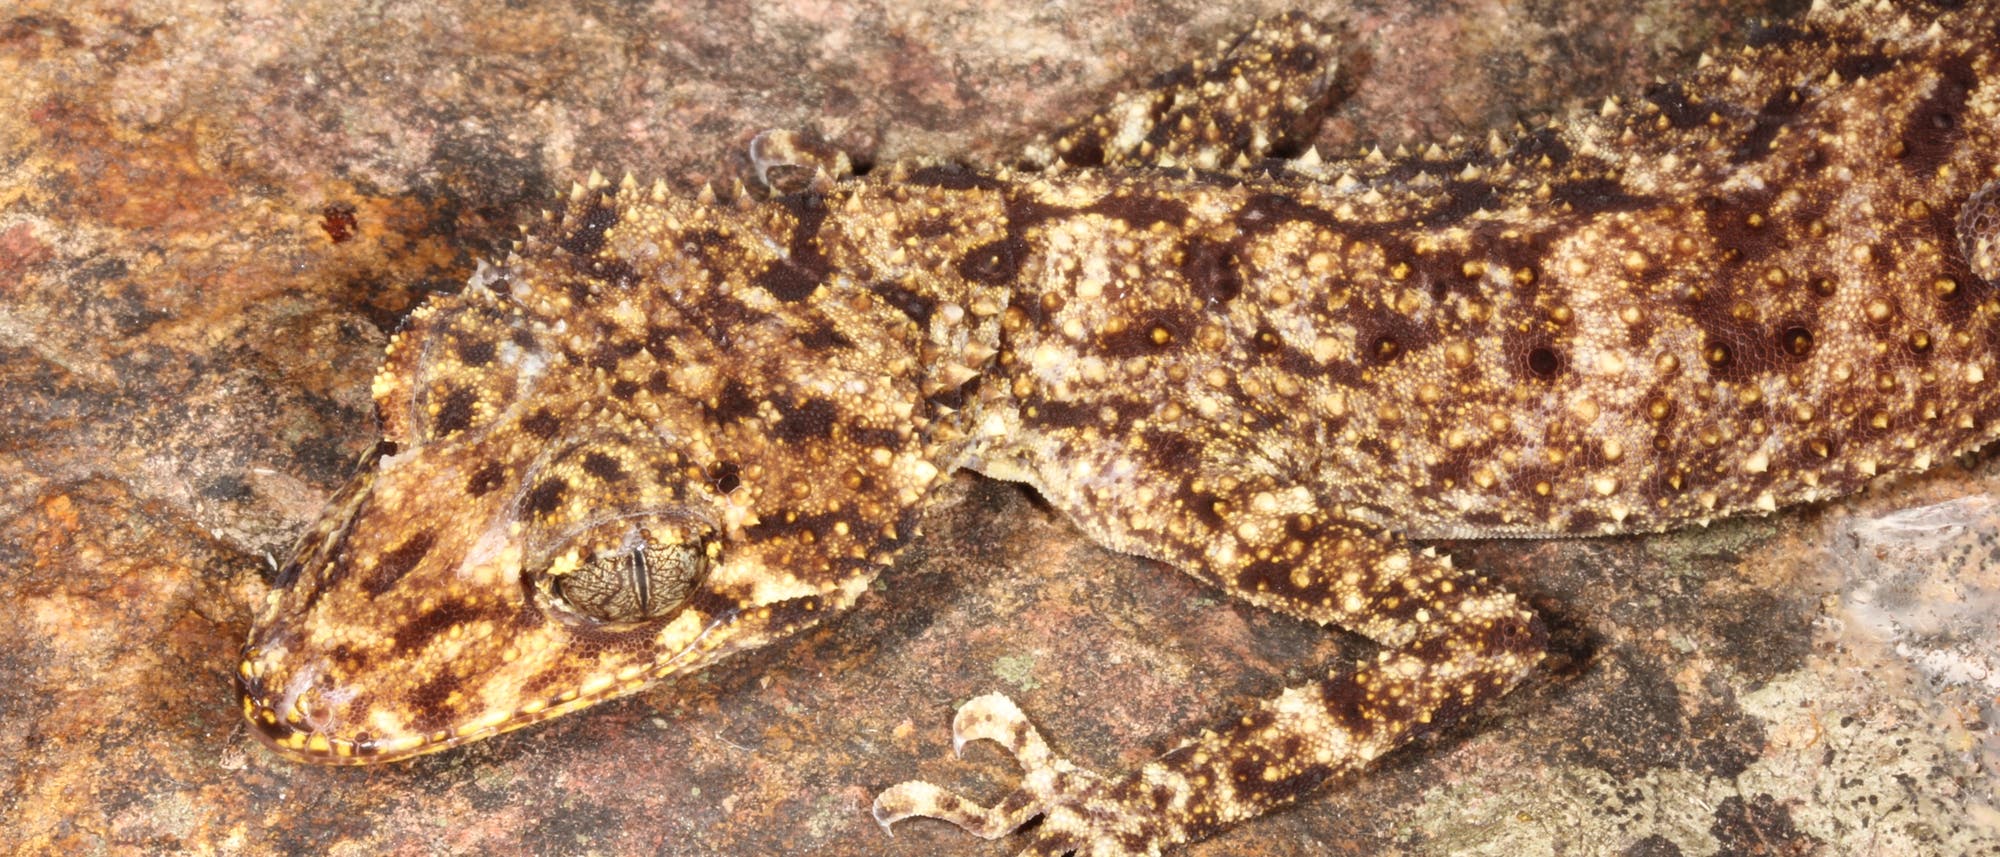 Neu entdeckte Geckoart in Australien